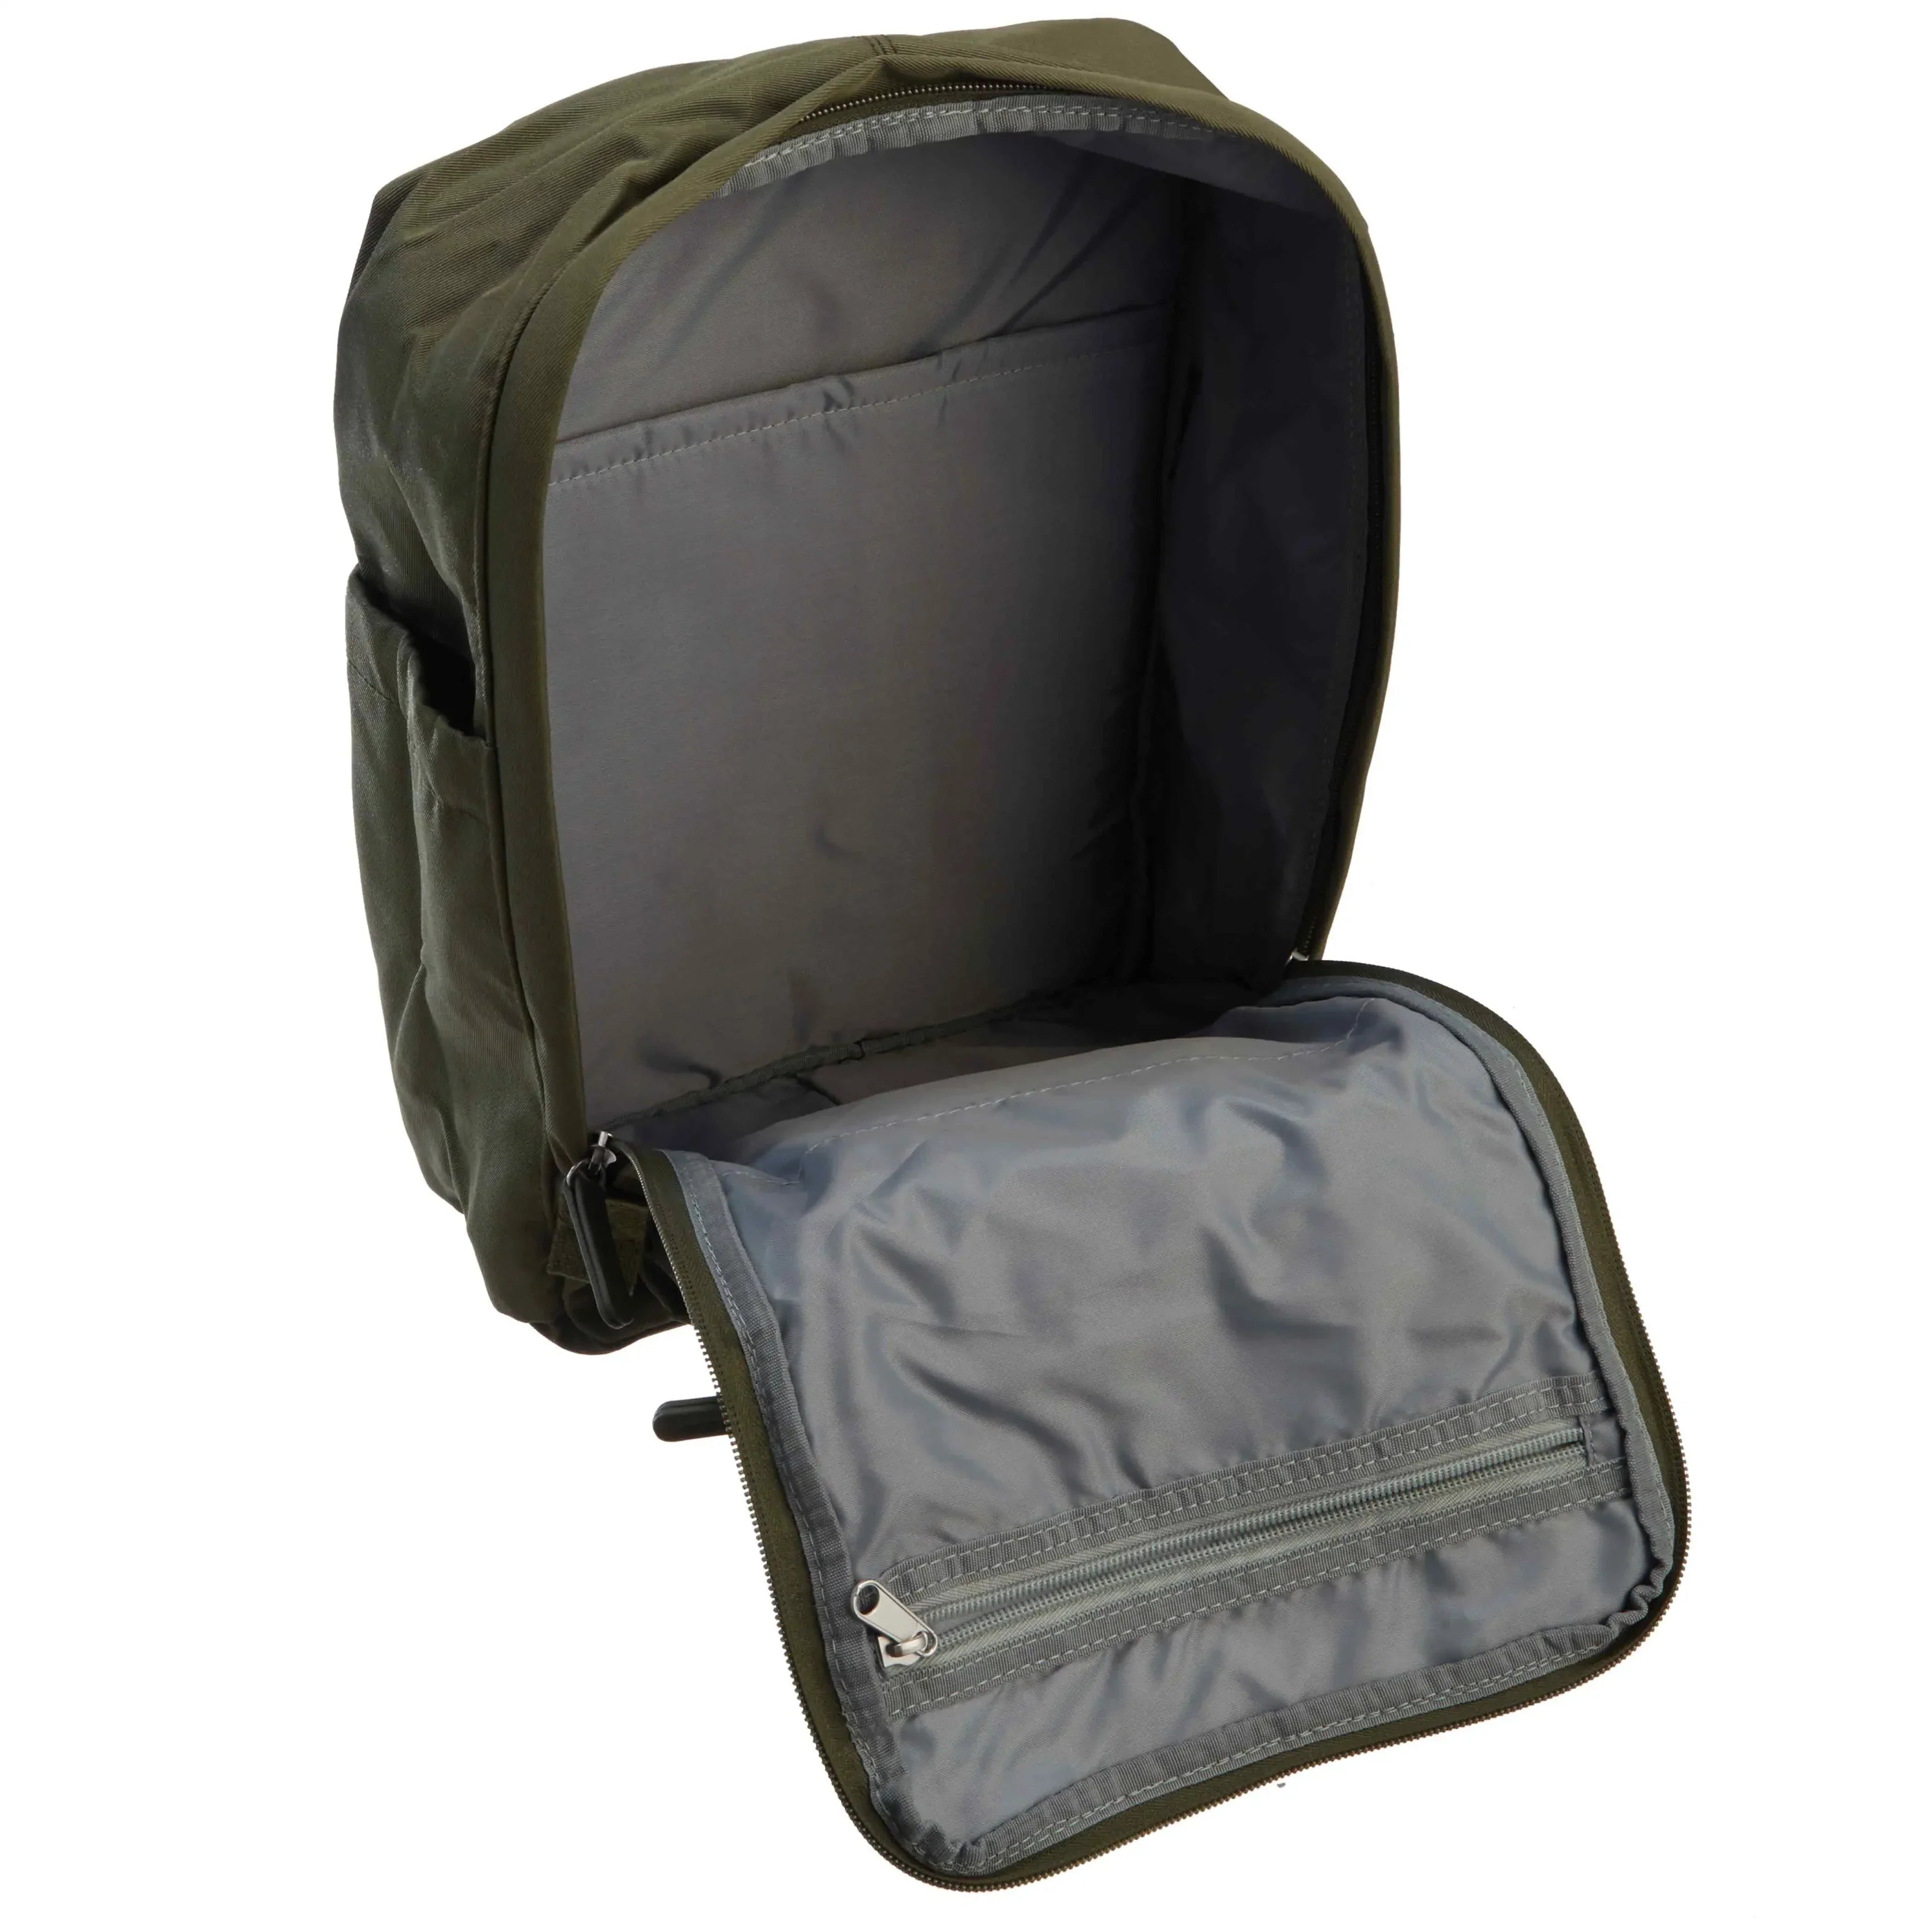 koffer-direkt.de Leisure backpack 39 cm - dark blue